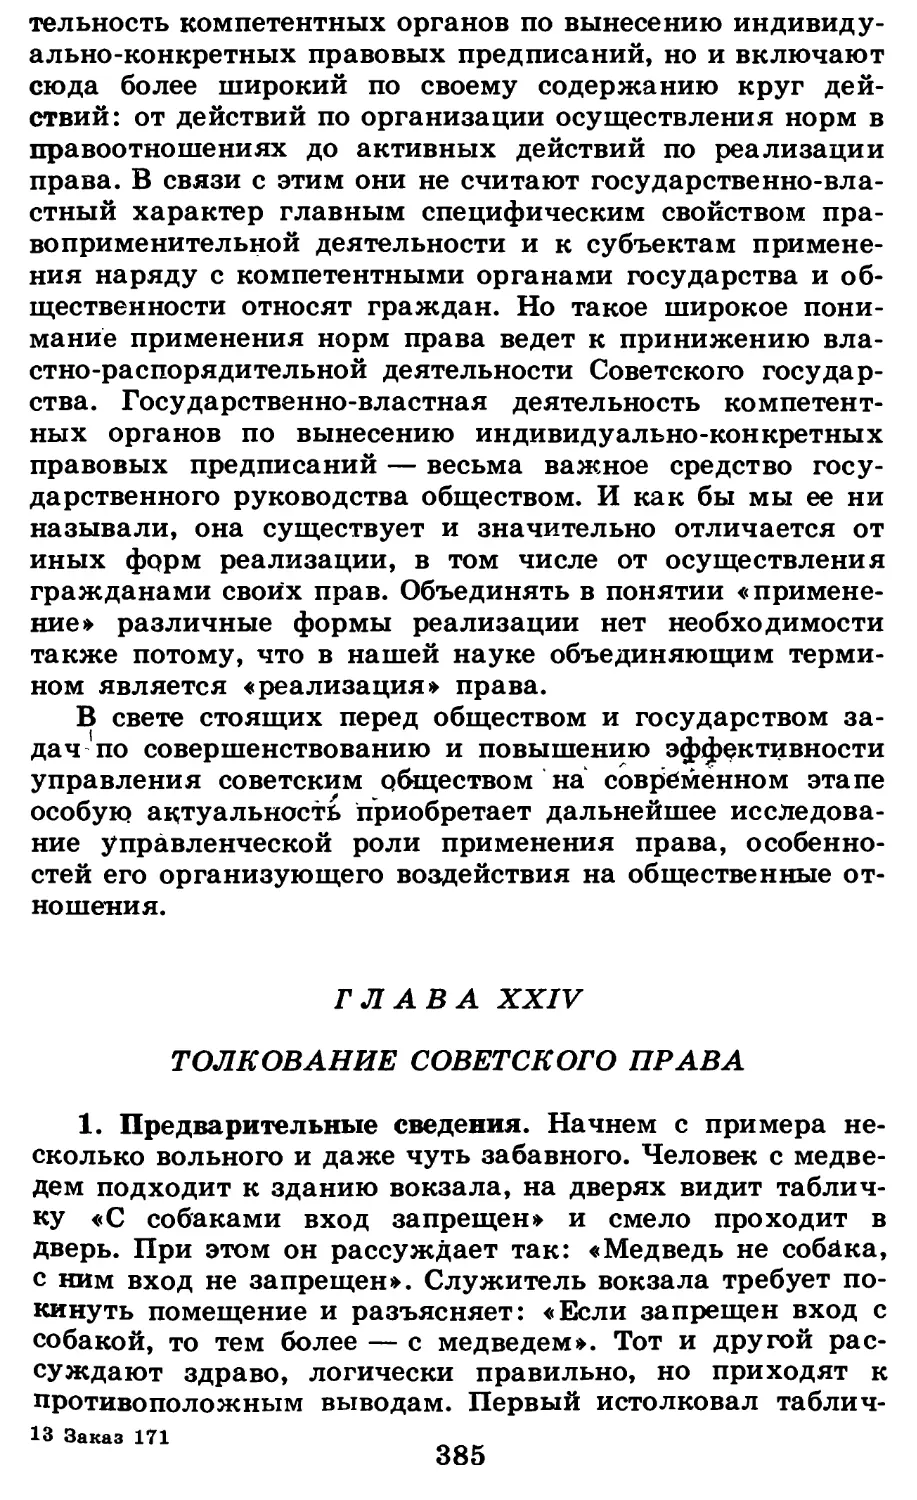 Глава XXIV. Толкование советского права